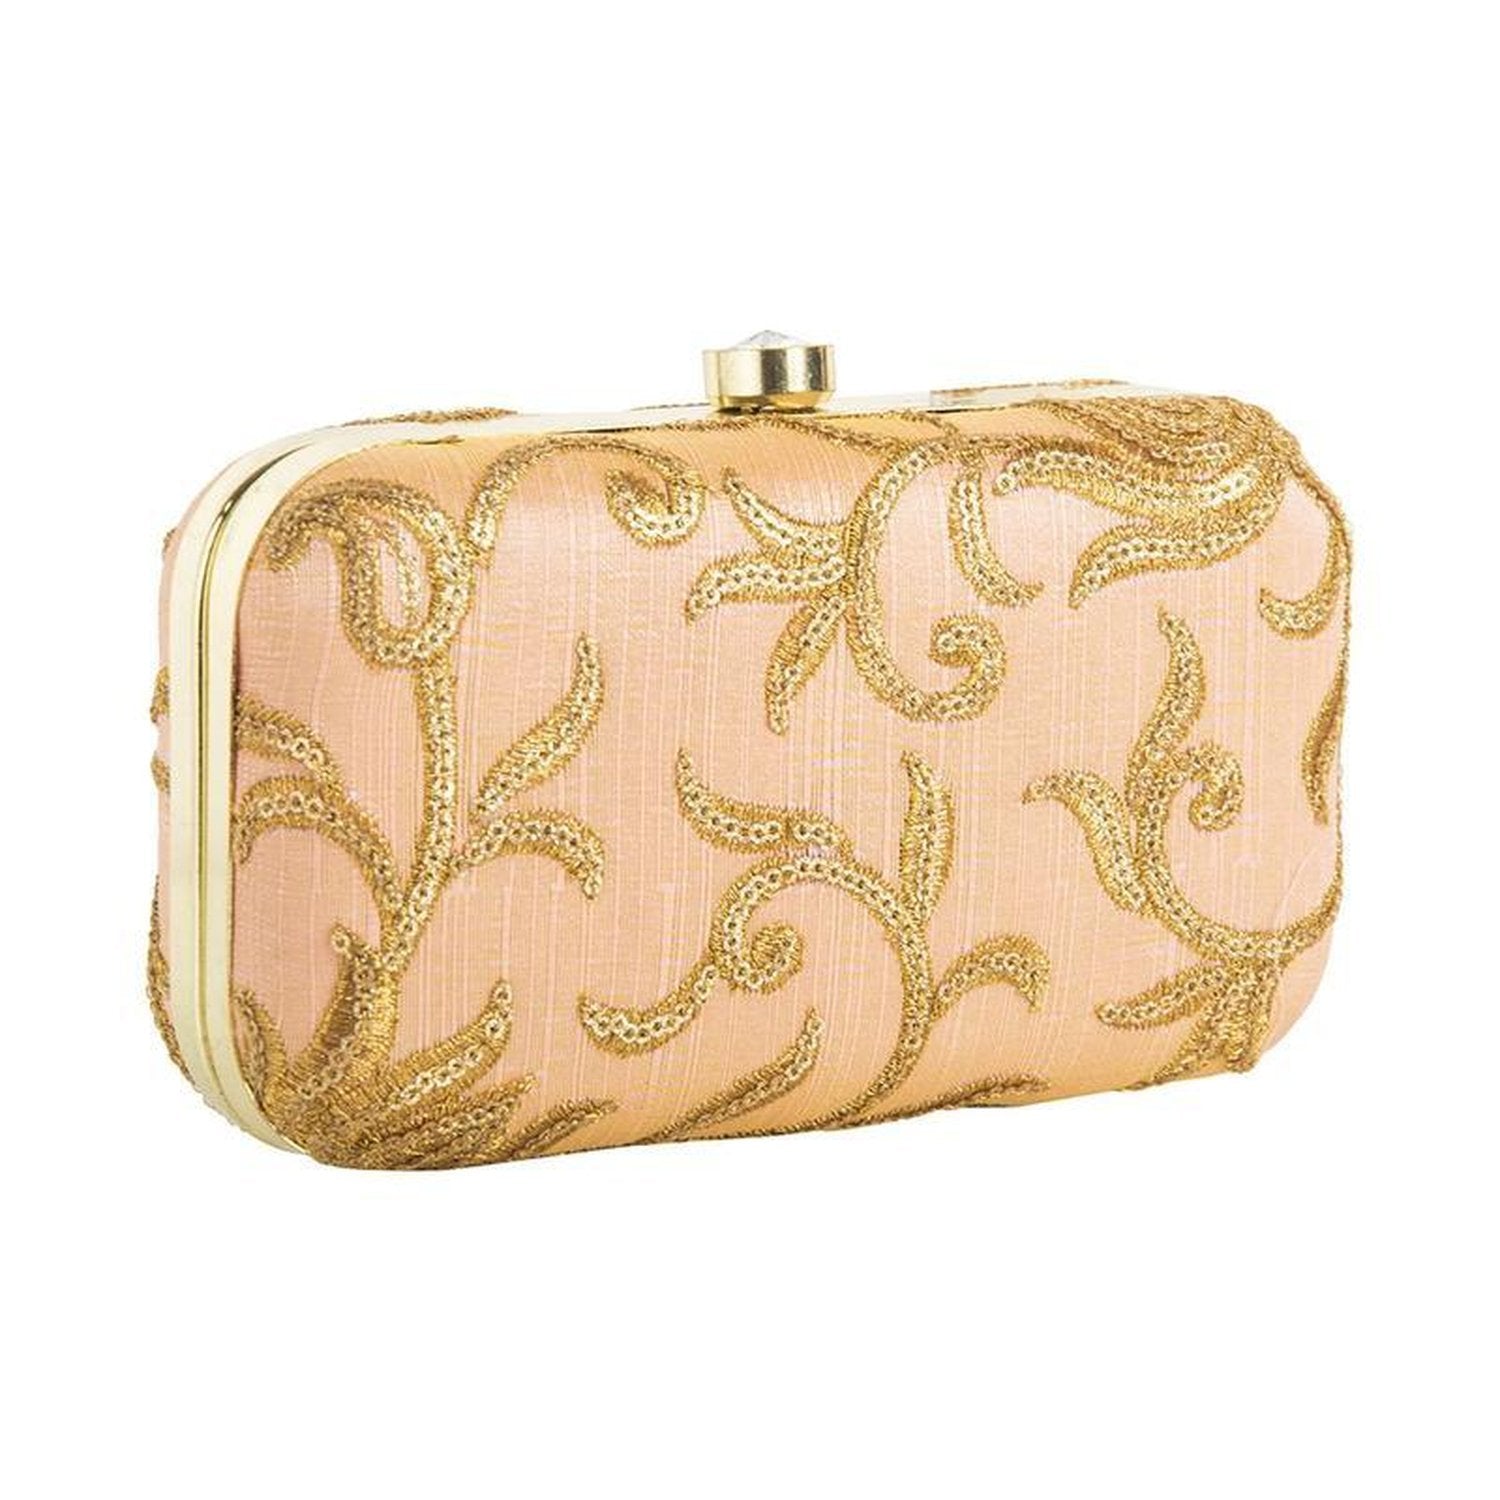 Buy Gold Handbags for Women by EXOTIC Online | Ajio.com